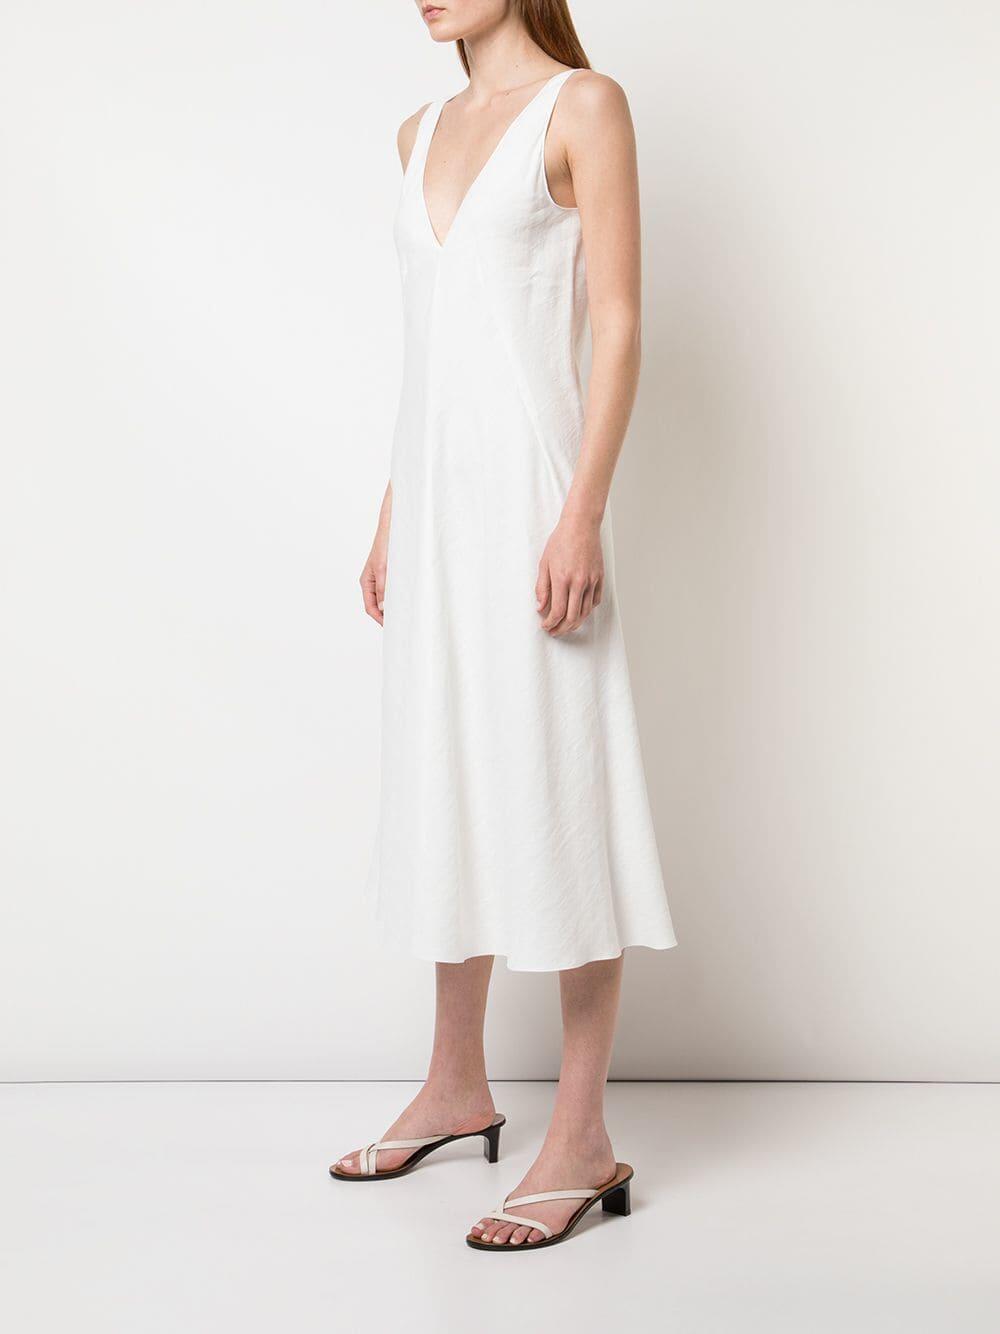 Peter Cohen - White Stretch Linen Sleeveless Dress